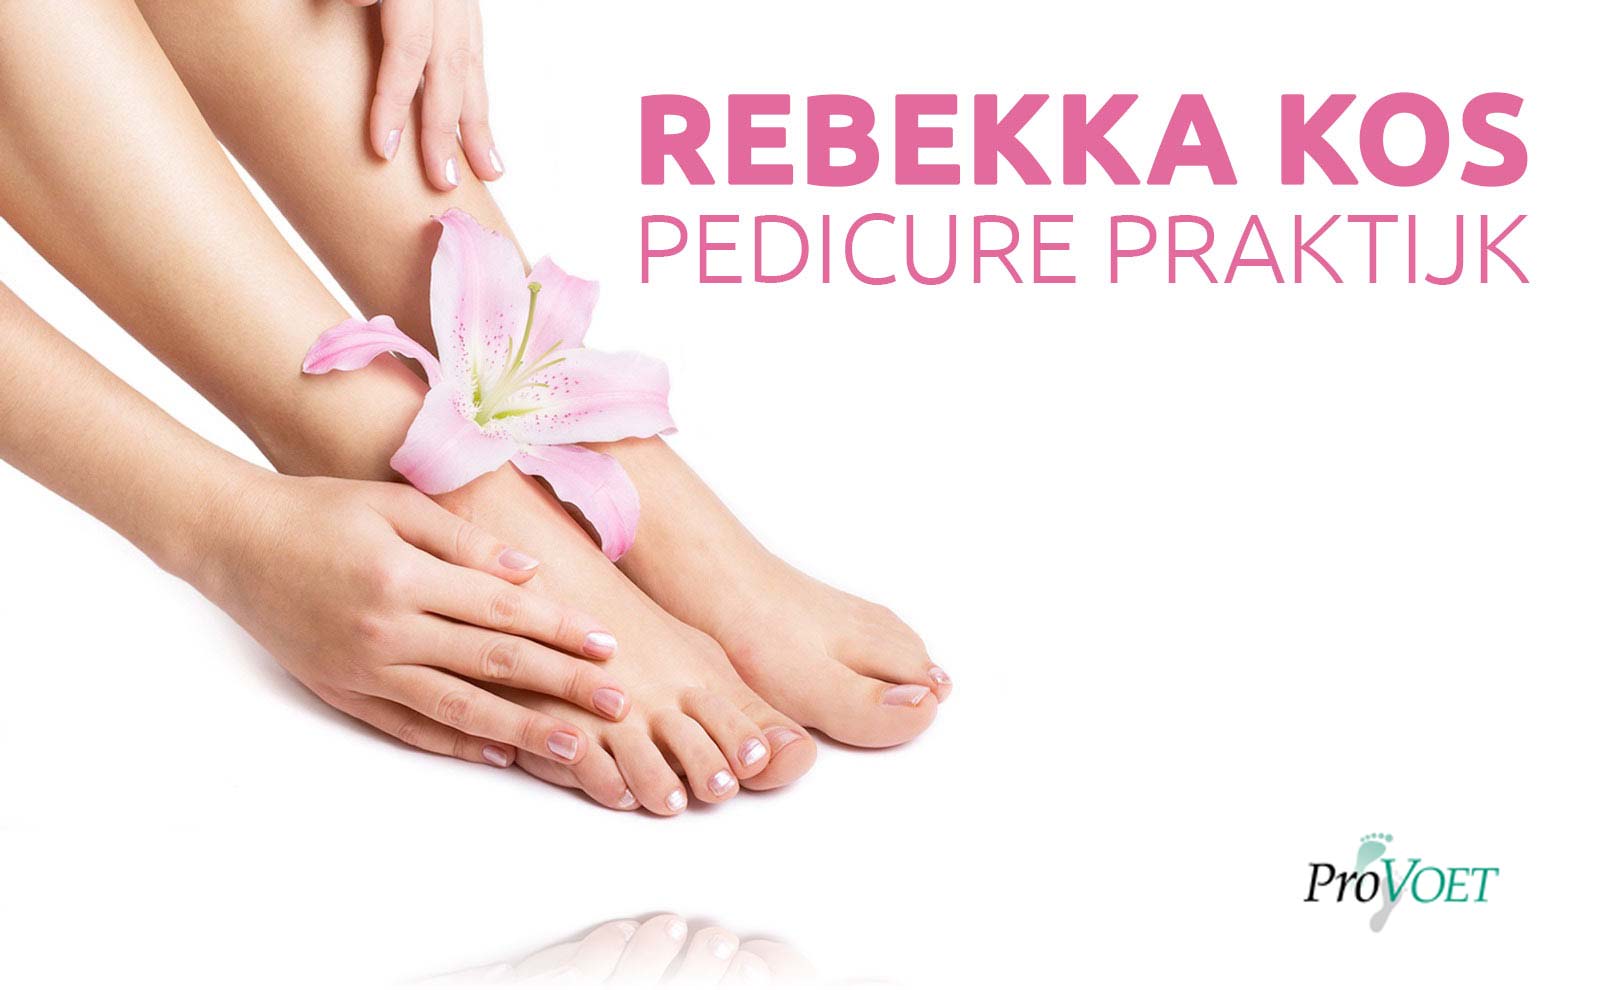 Neem contact op met Rebekka Kos Pedicure